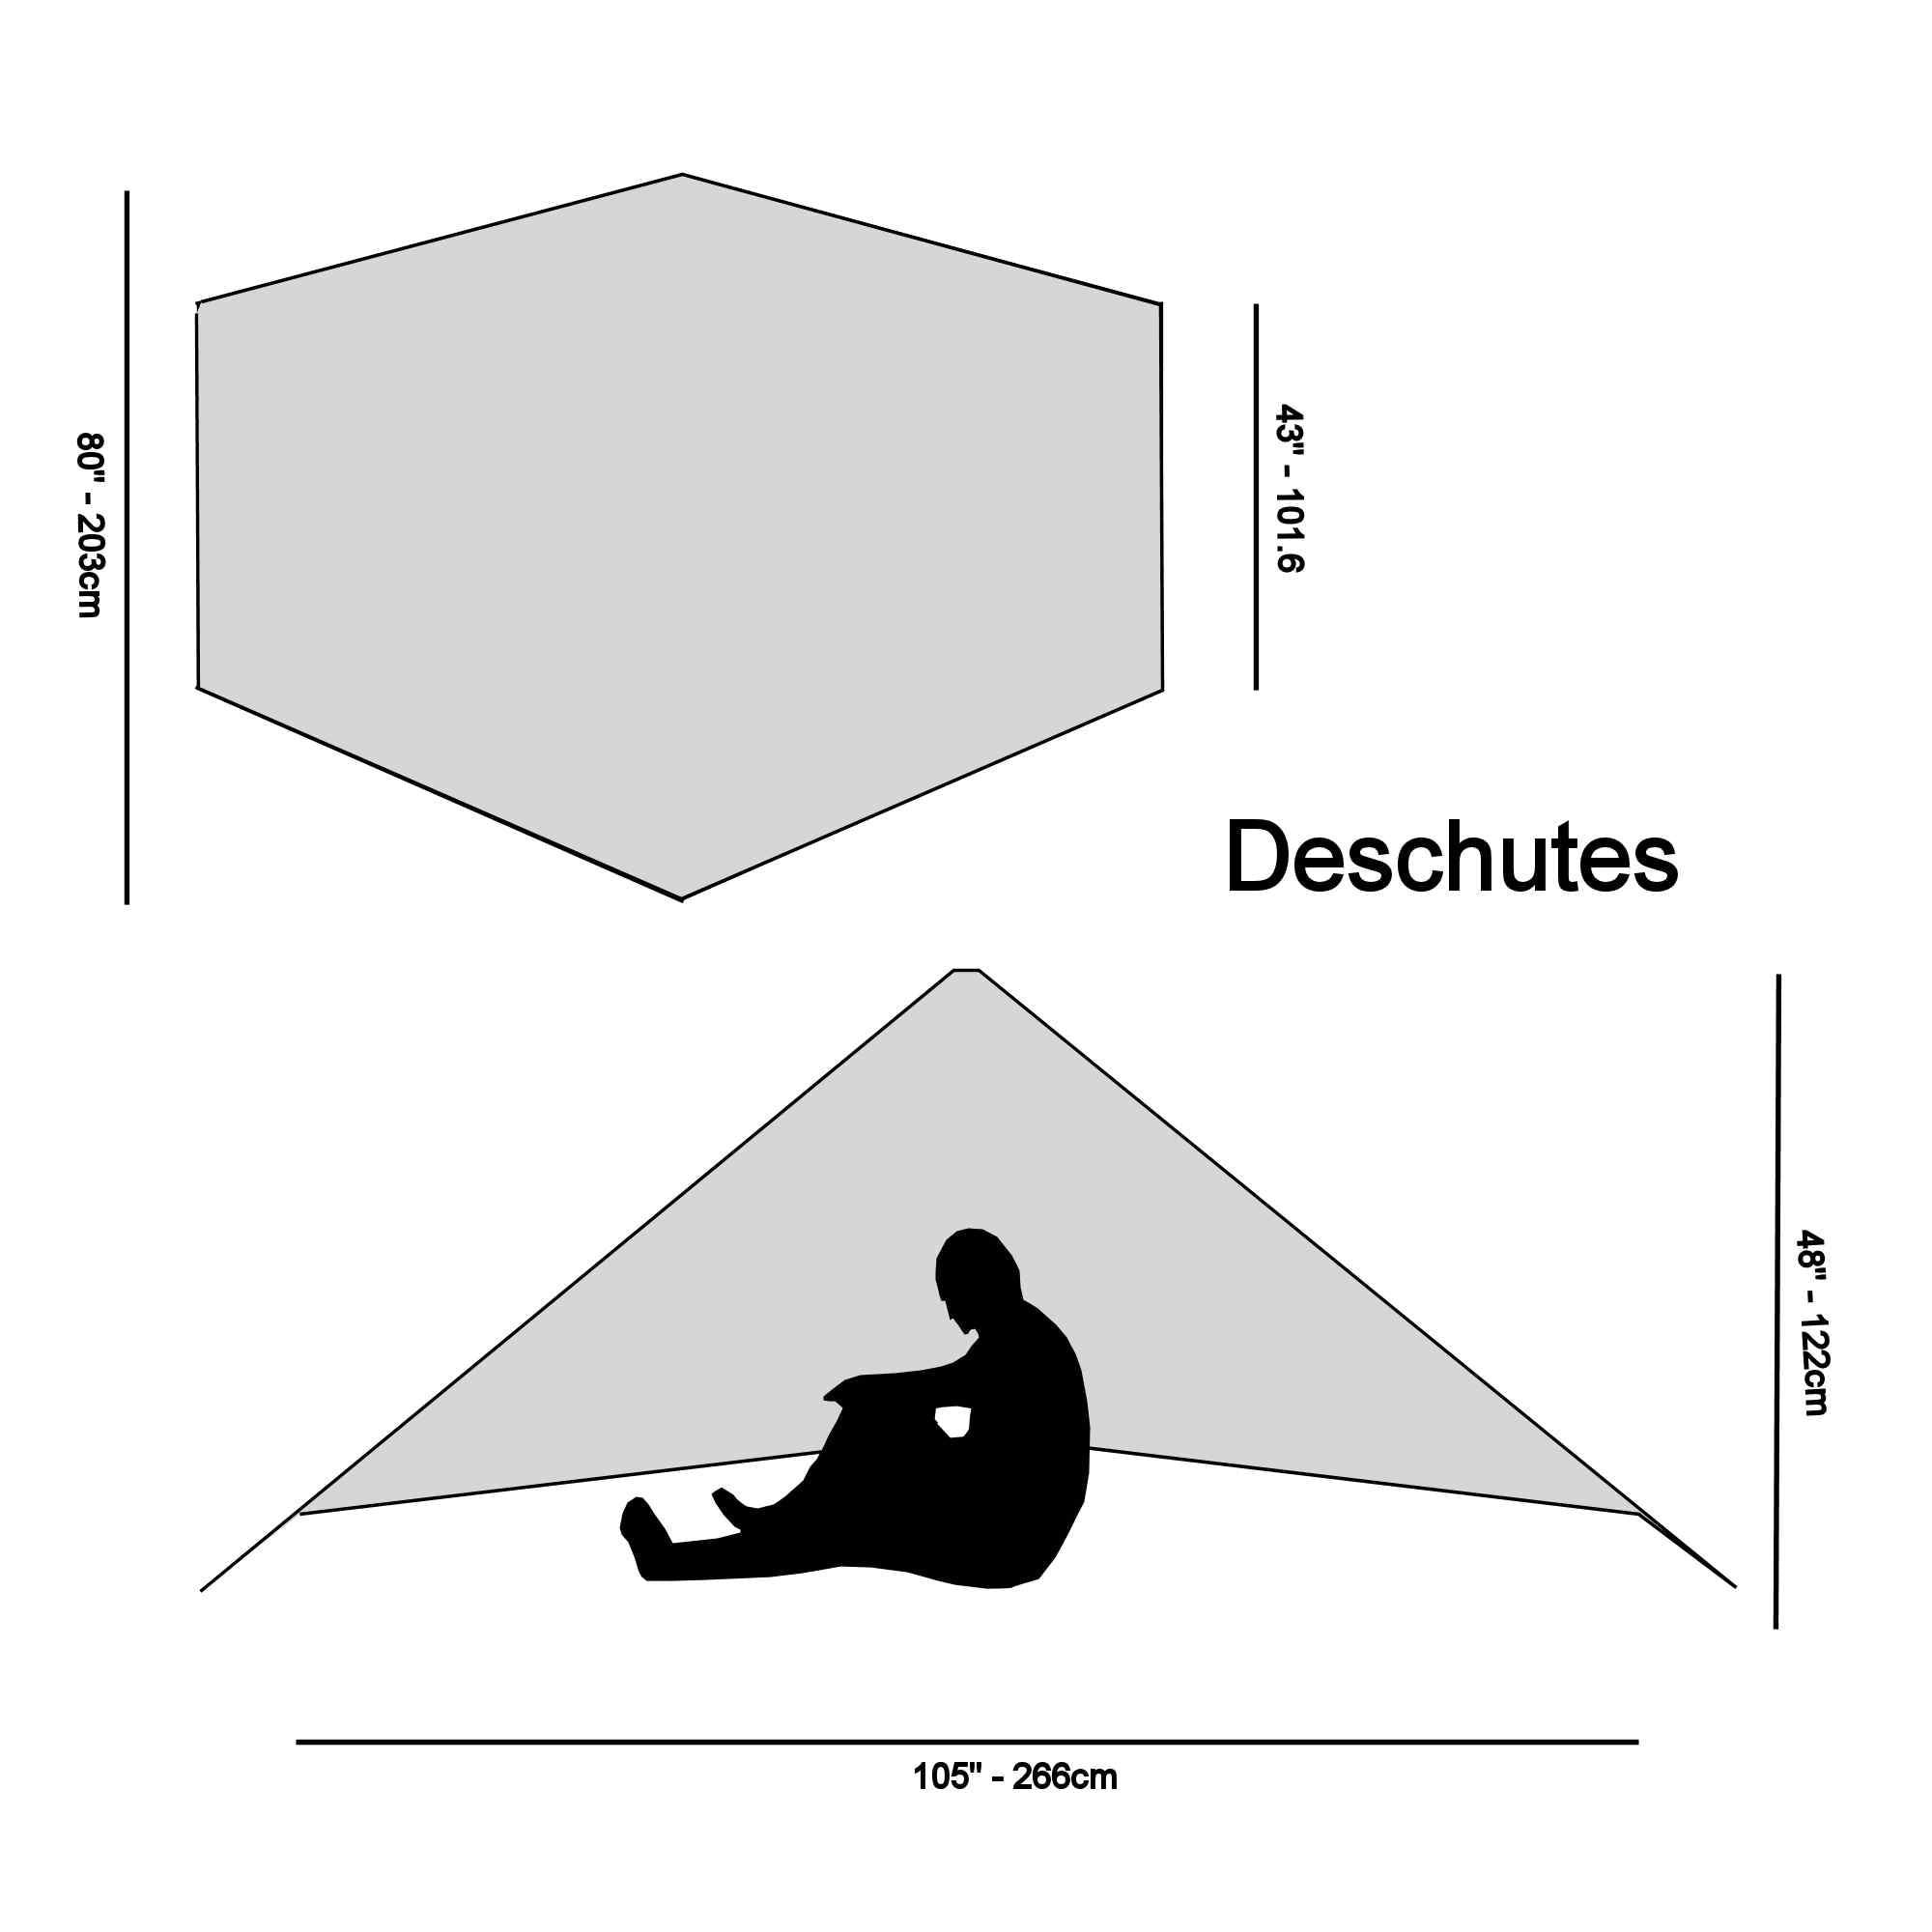 Dimensions diagram for the Deschutes tarp